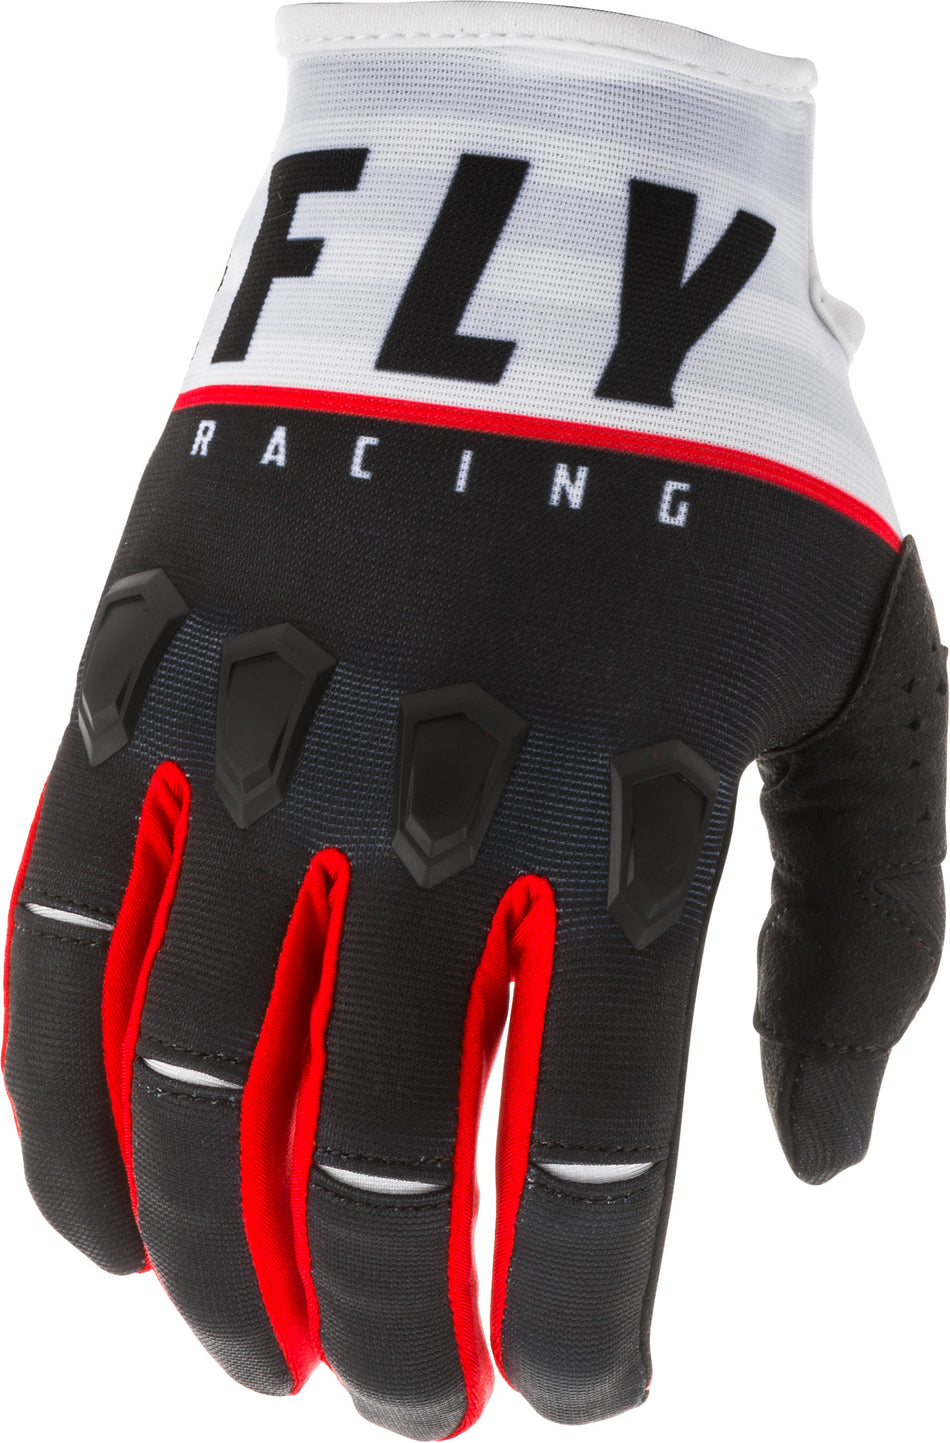 FLY RACING Kinetic K120 Gloves Black/White/Red Sz 12 373-41312